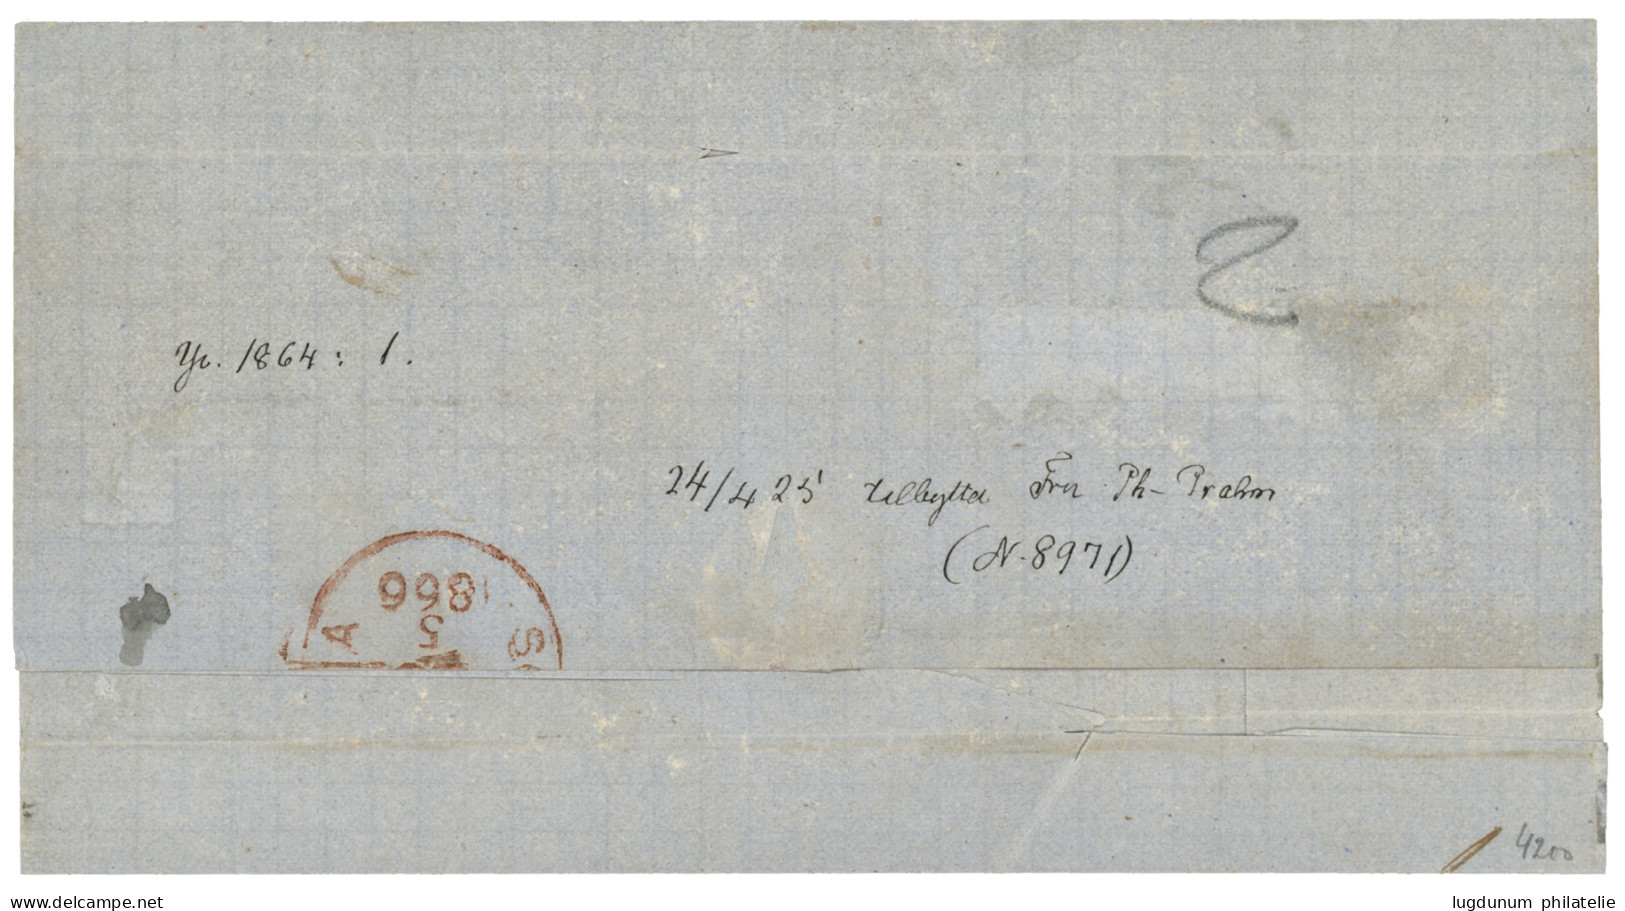 SAMARANG + FRANCO : 1866 10c (n°1) Touched At Left Canc. FRANCO + Round Cds SAMARANG On Cover To SOERABAYA. Vf. - Niederländisch-Indien